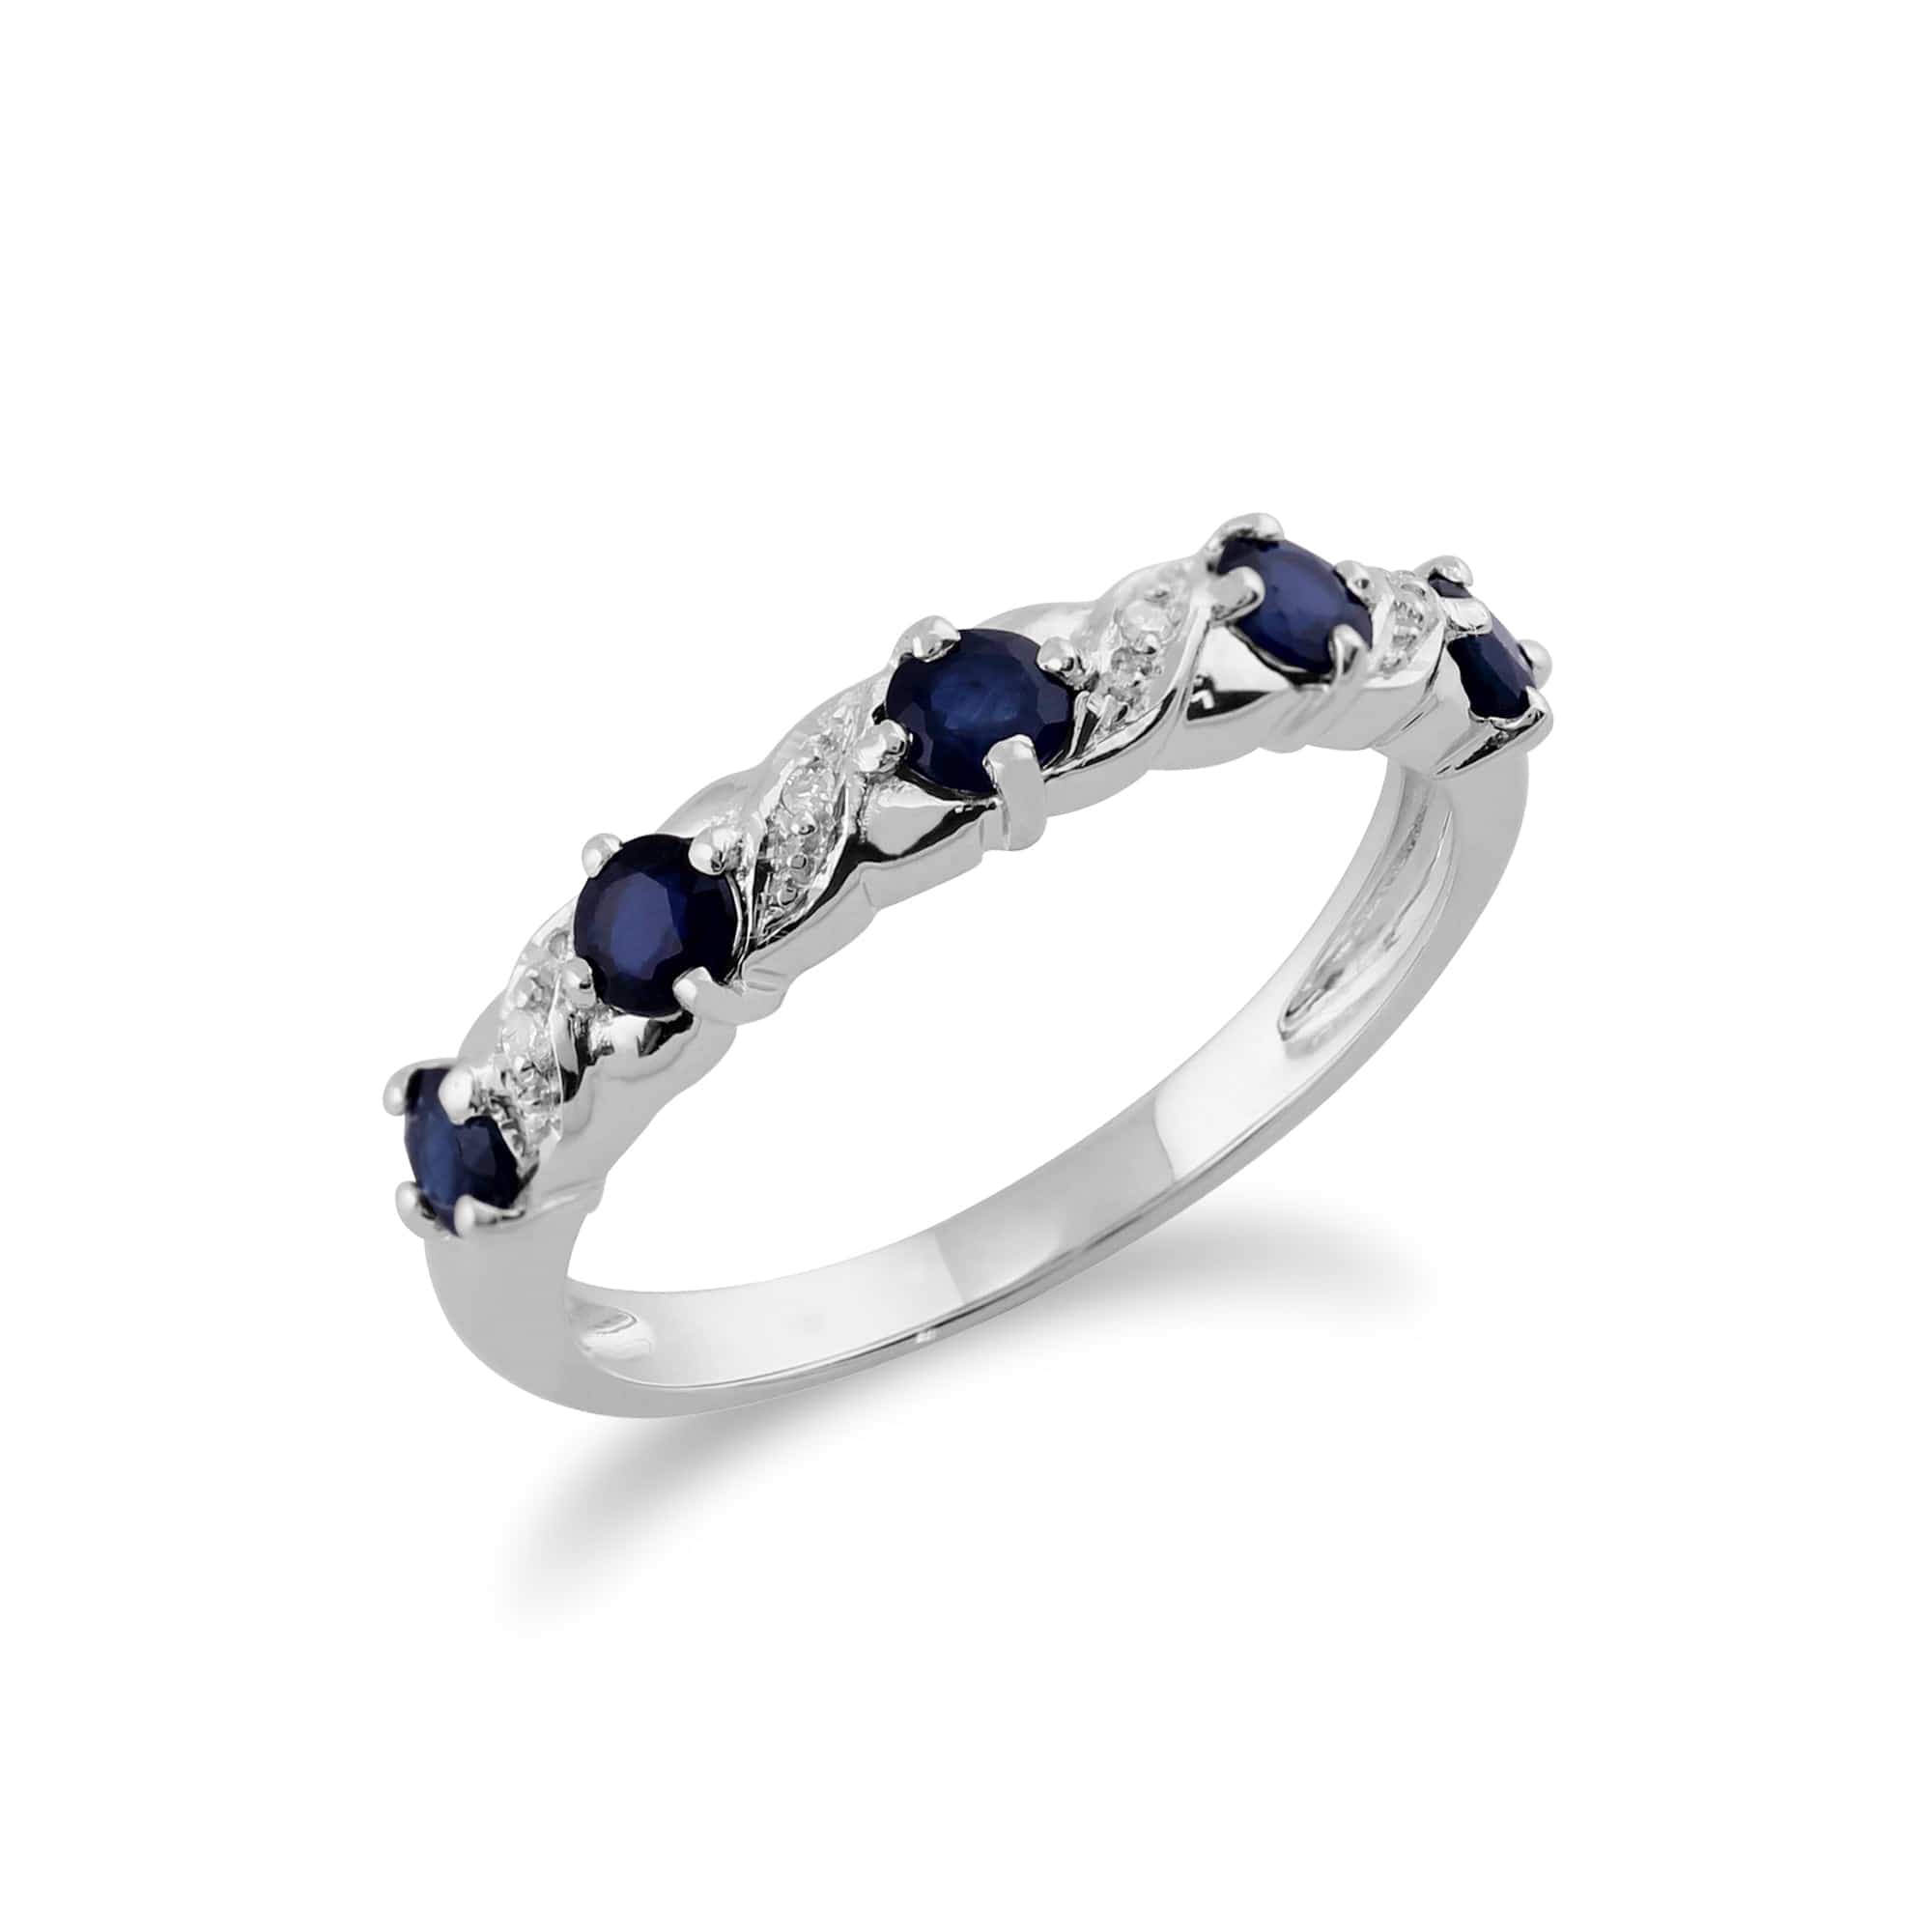 117R0070019 Art Nouveau Style Sapphire & Diamond Half Eternity Ring in 9ct White Gold 2